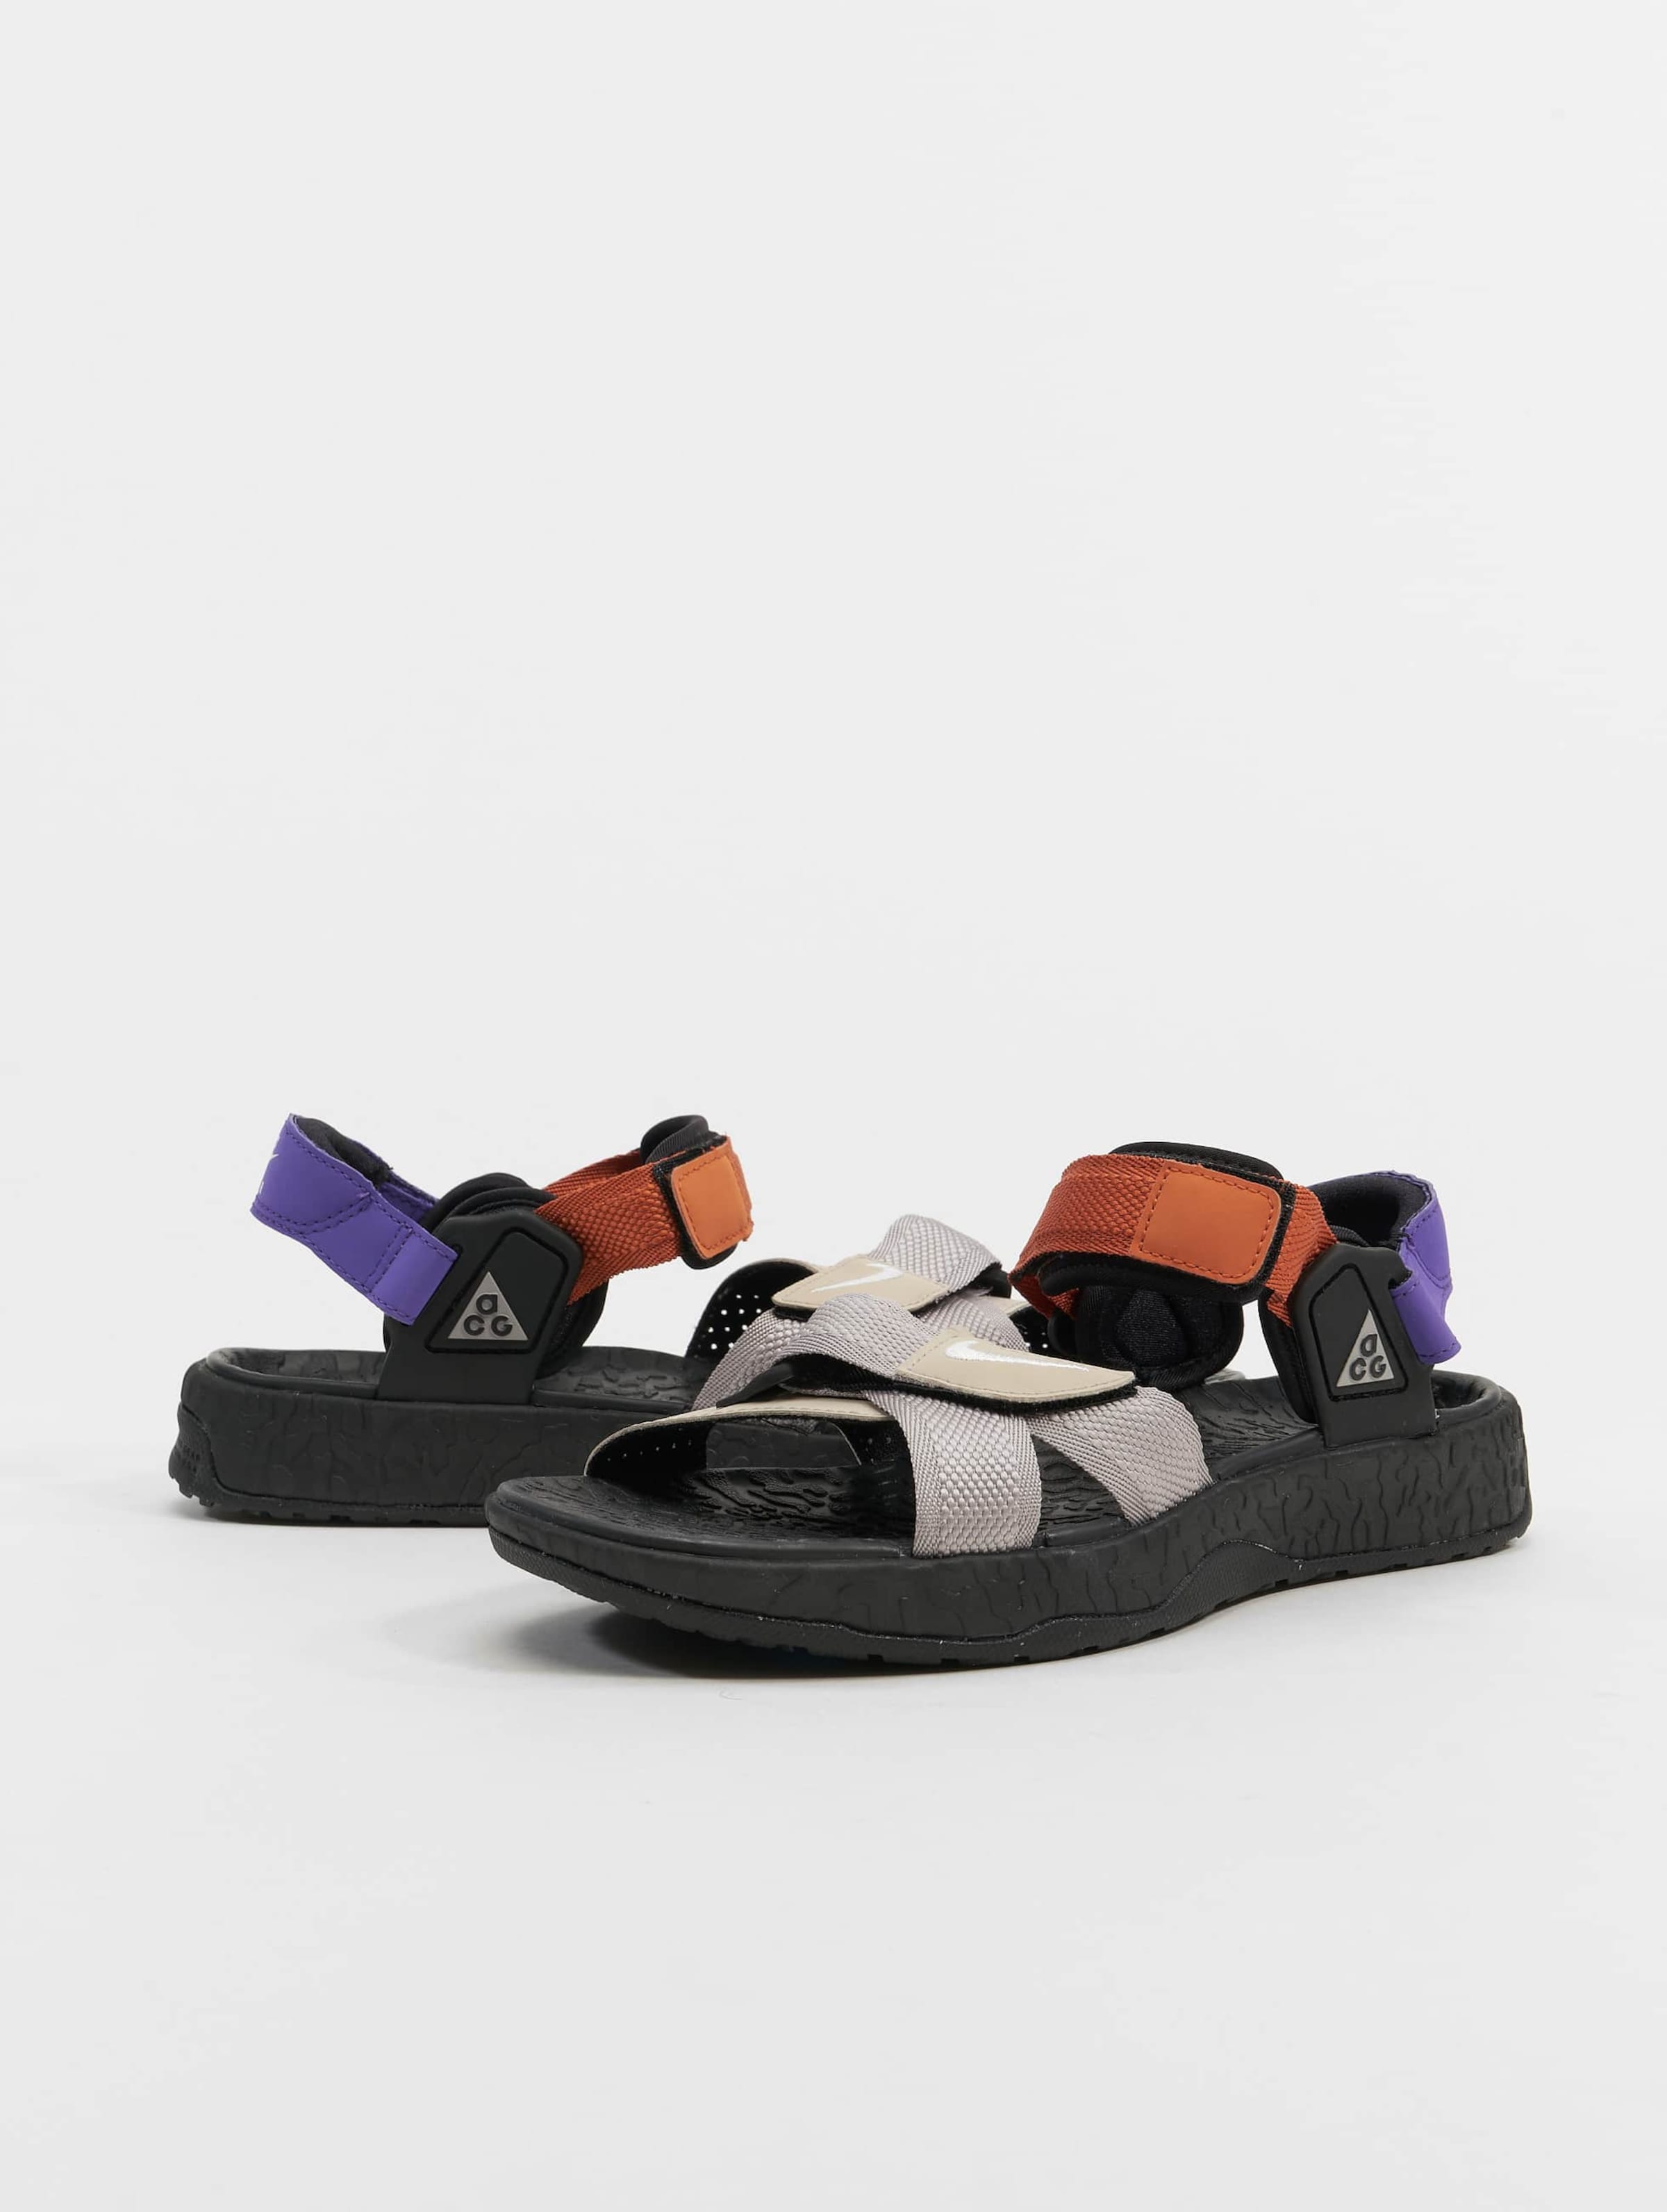 ACG Sandals & Slides. Nike.com